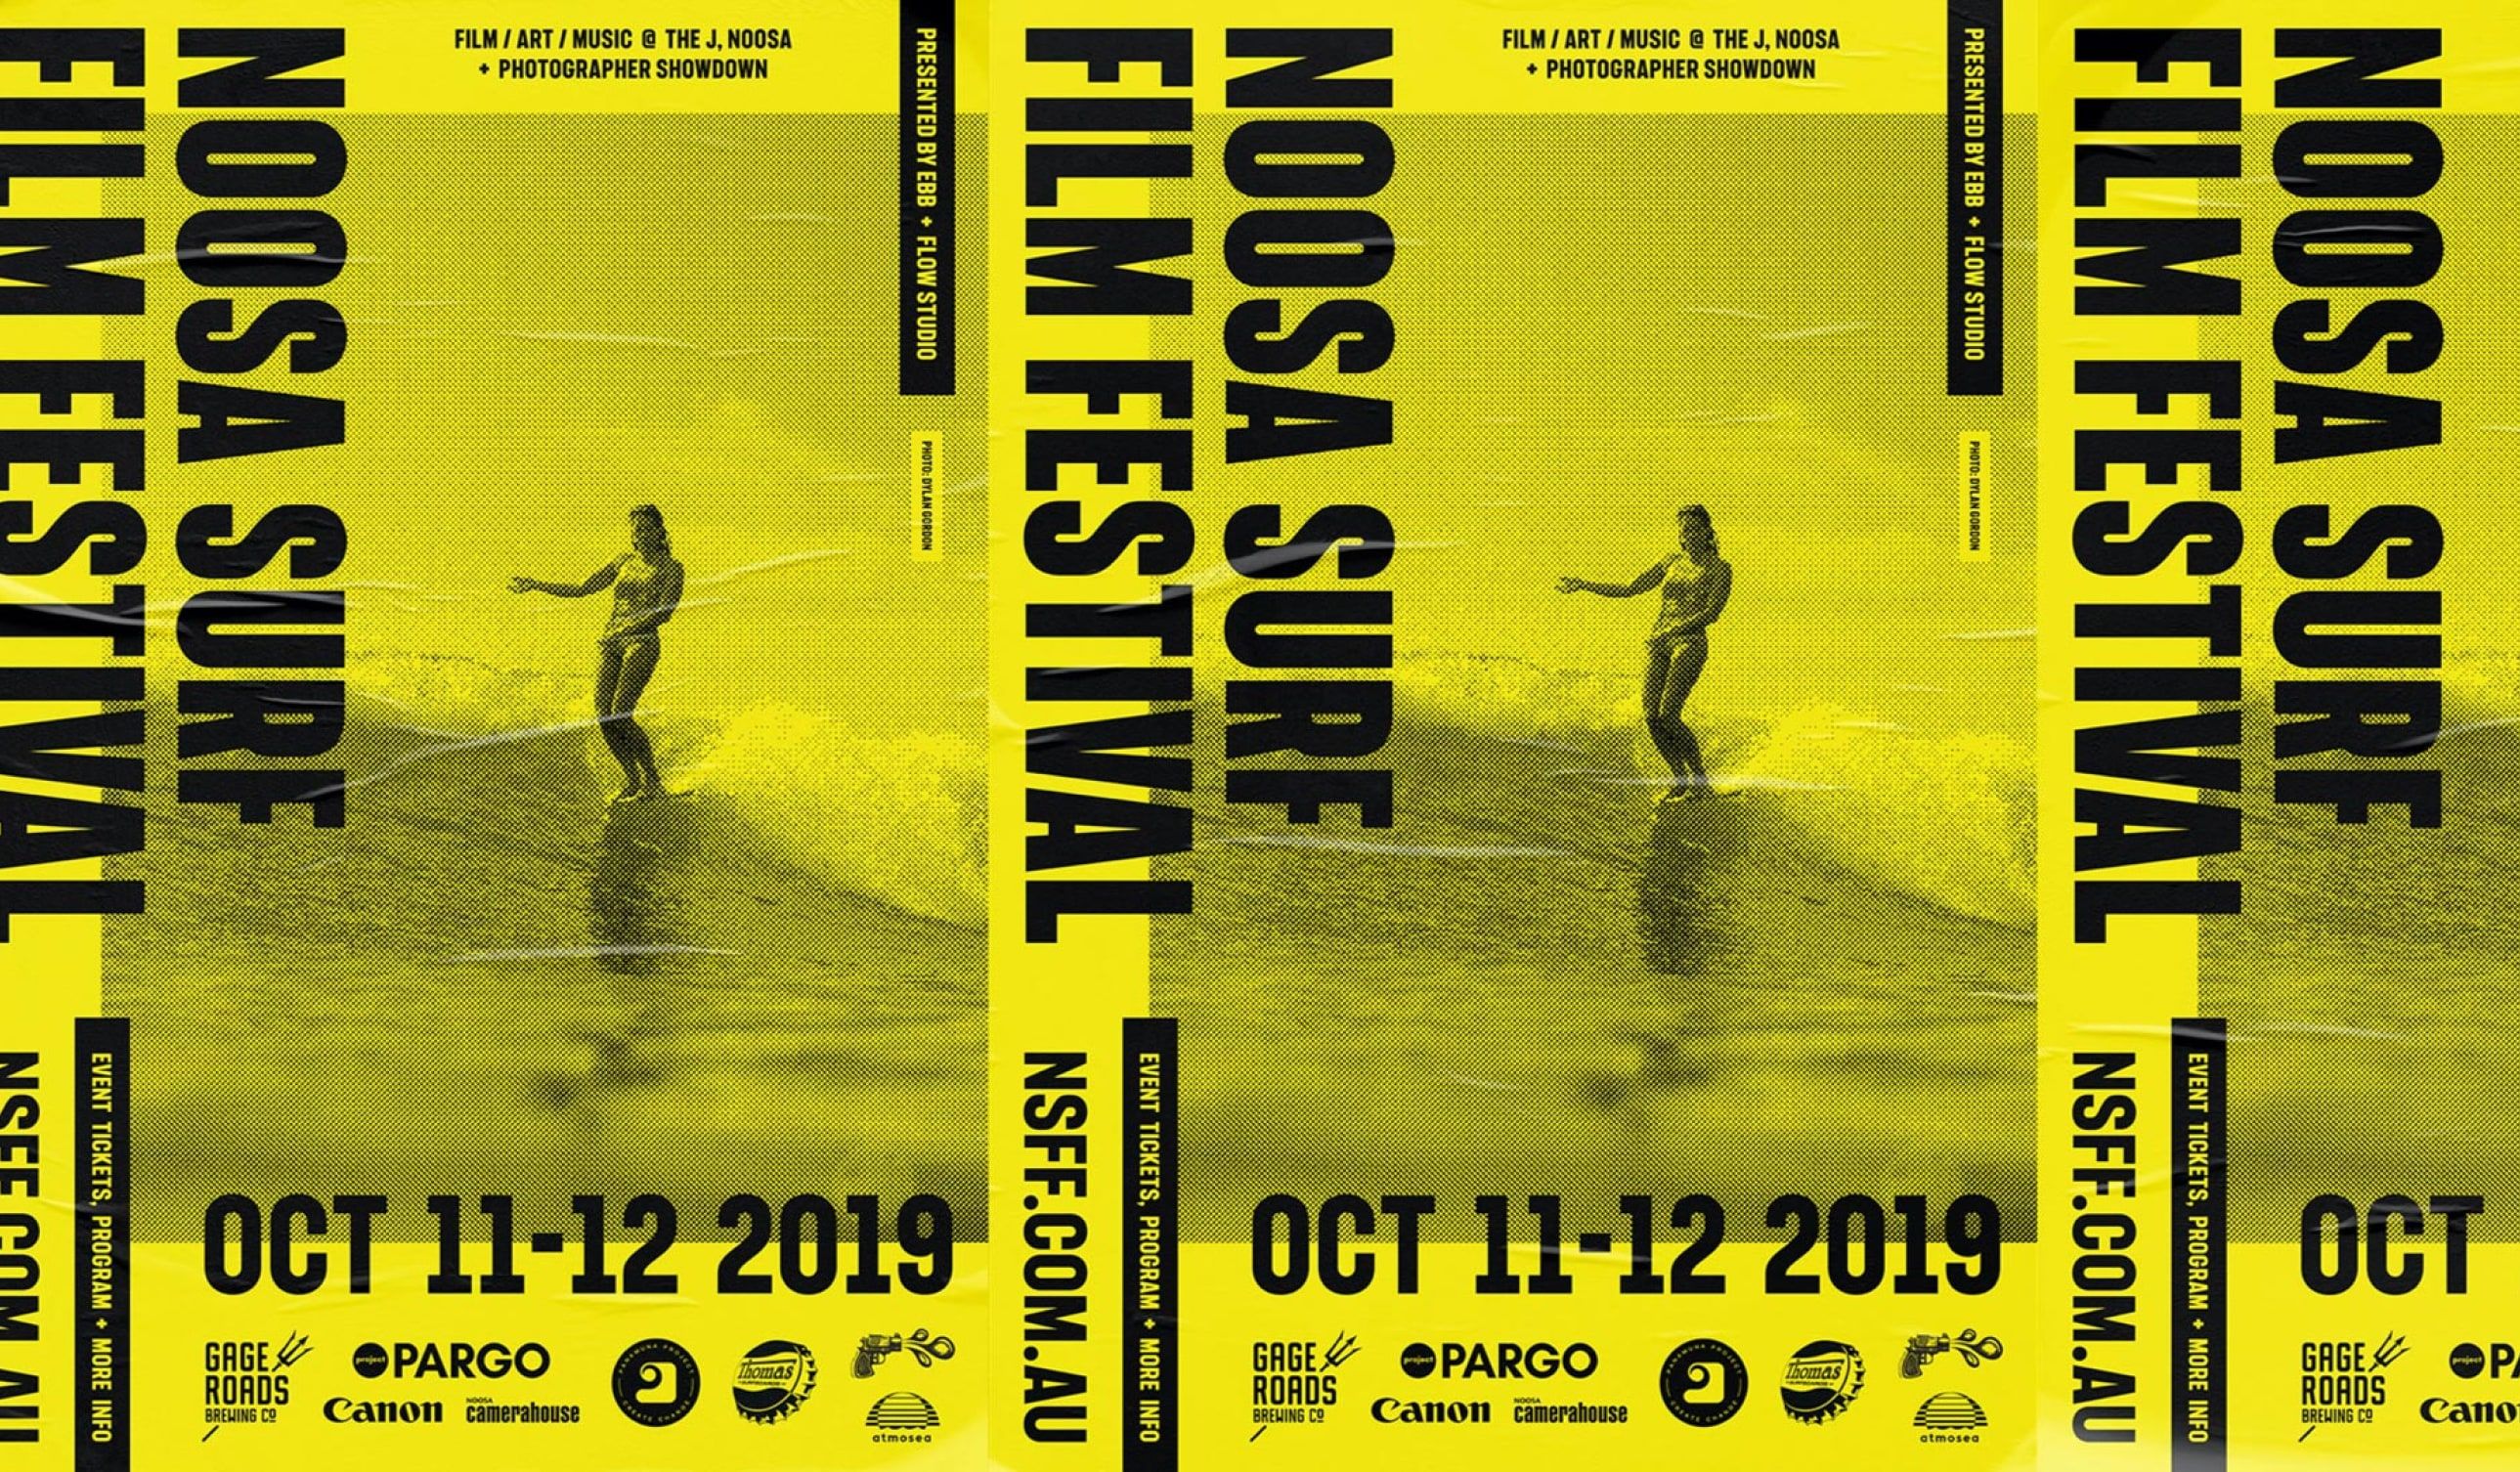 Noosa Surf Film Festival project image